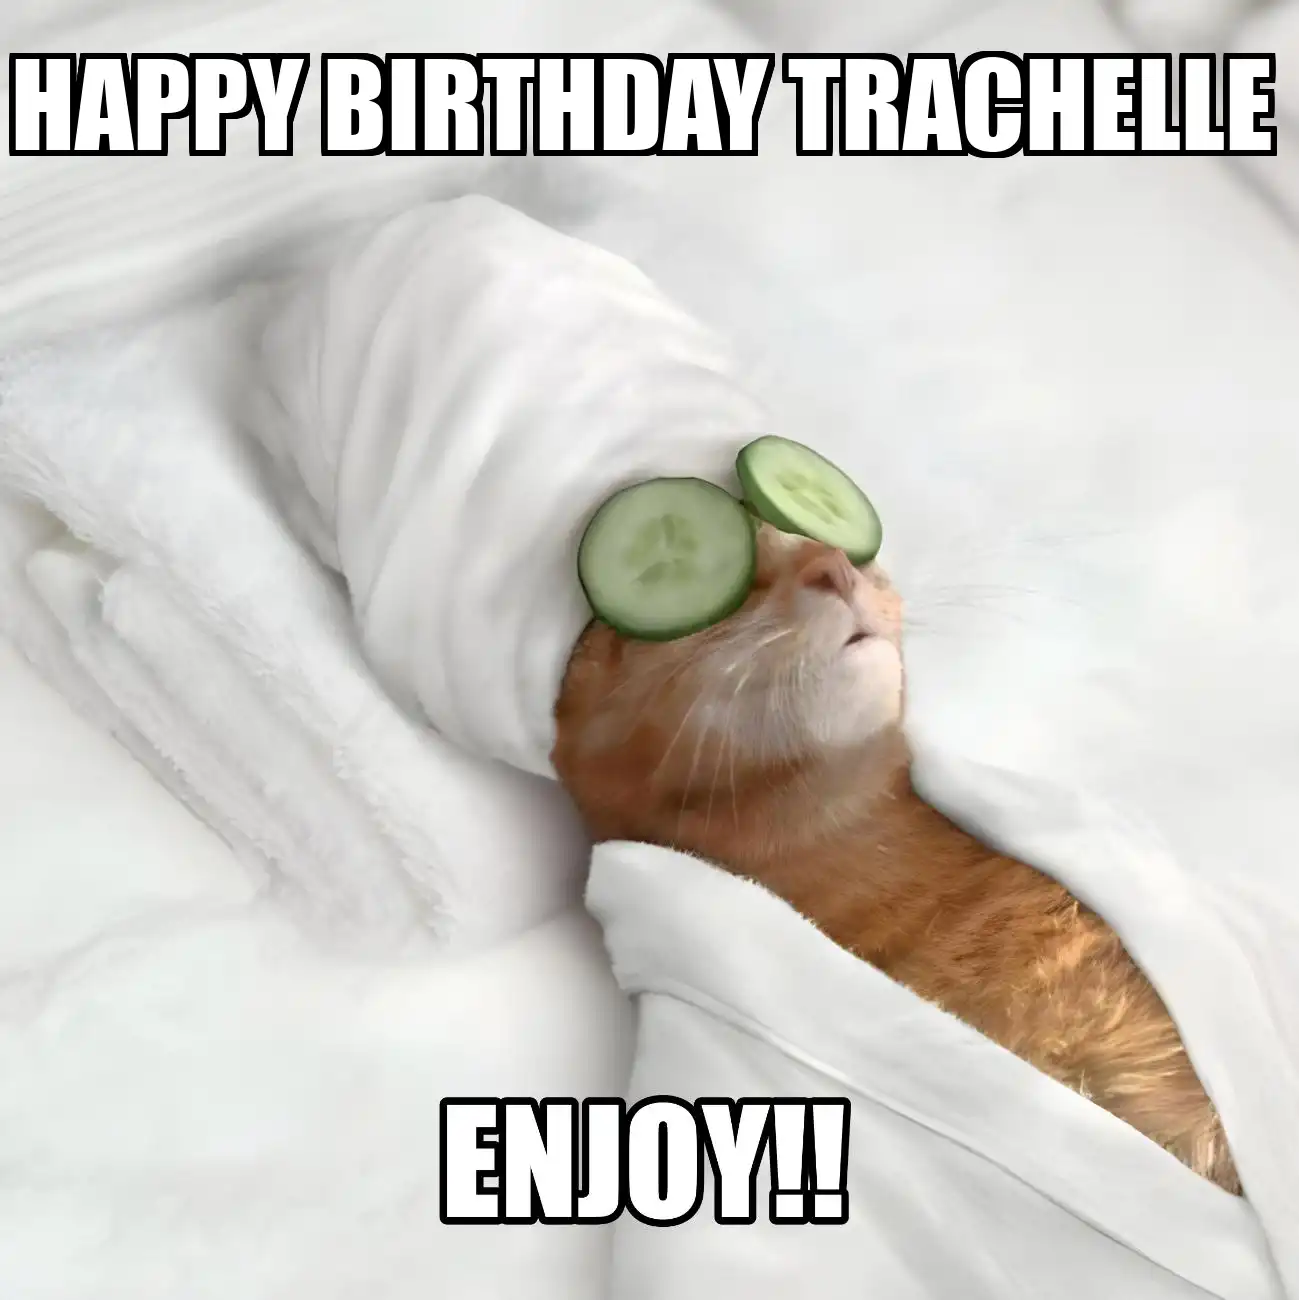 Happy Birthday Trachelle Enjoy Cat Meme